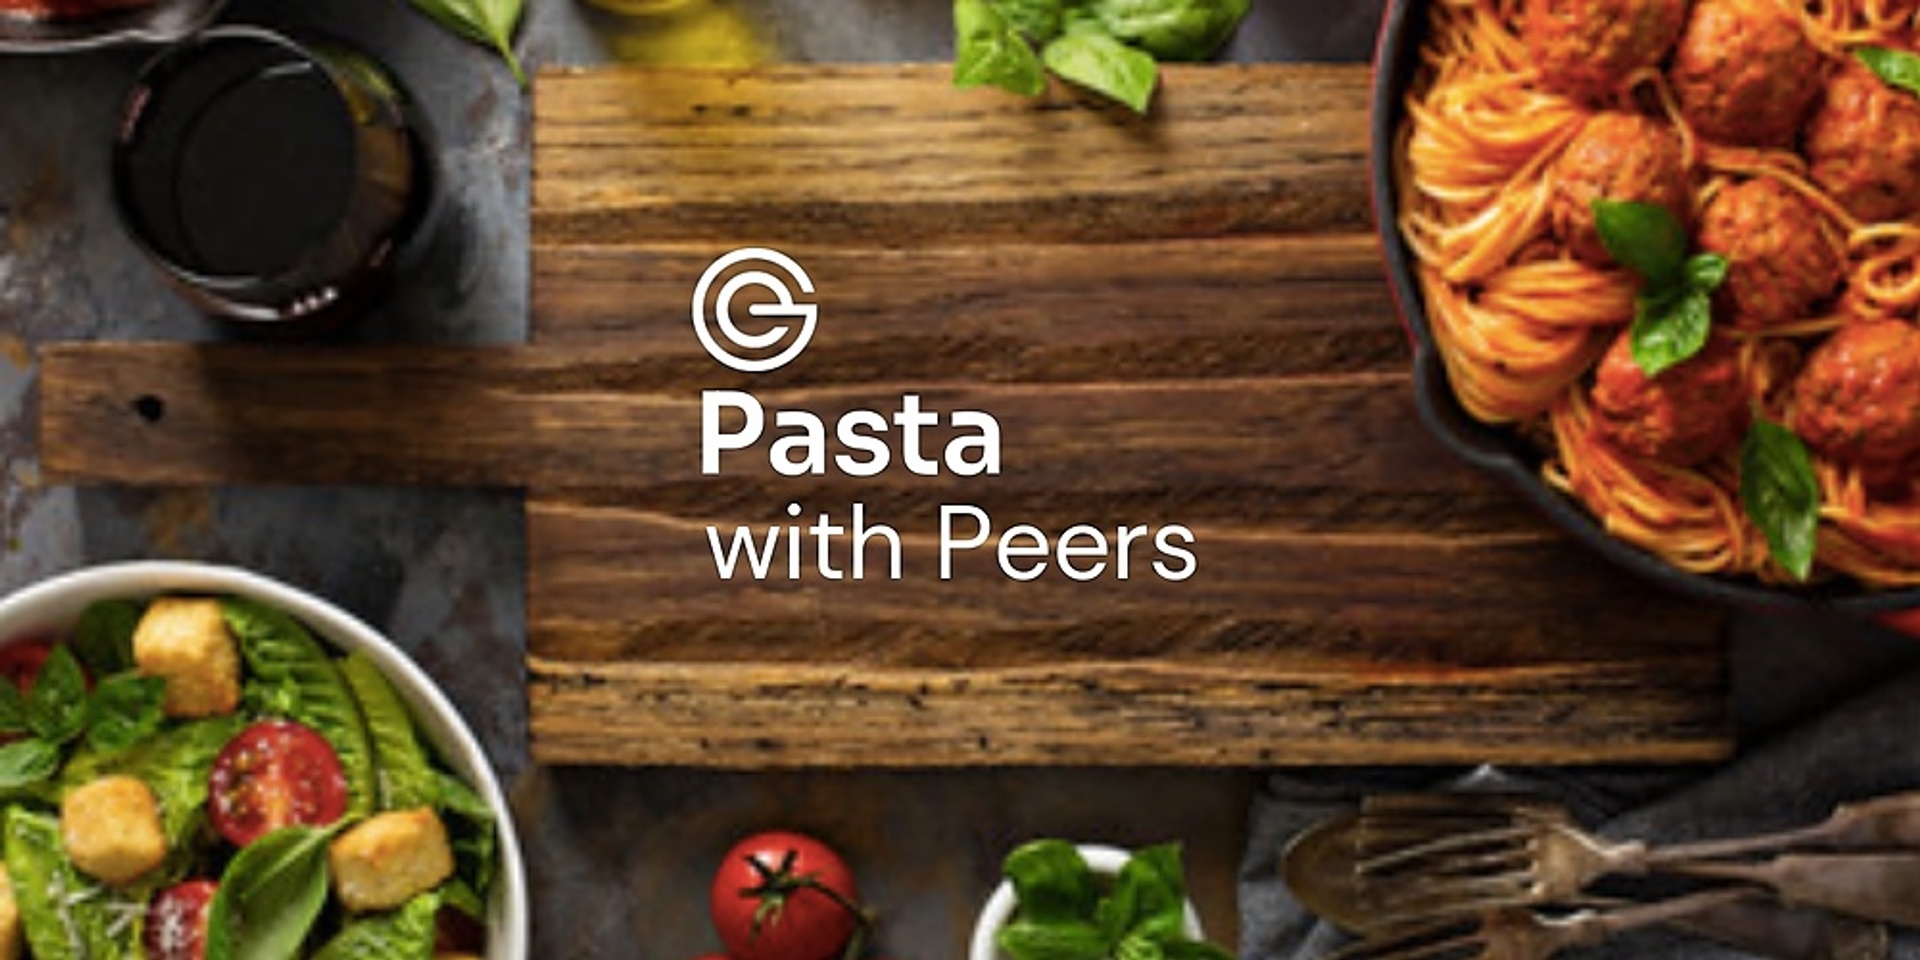 Pasta with Peers